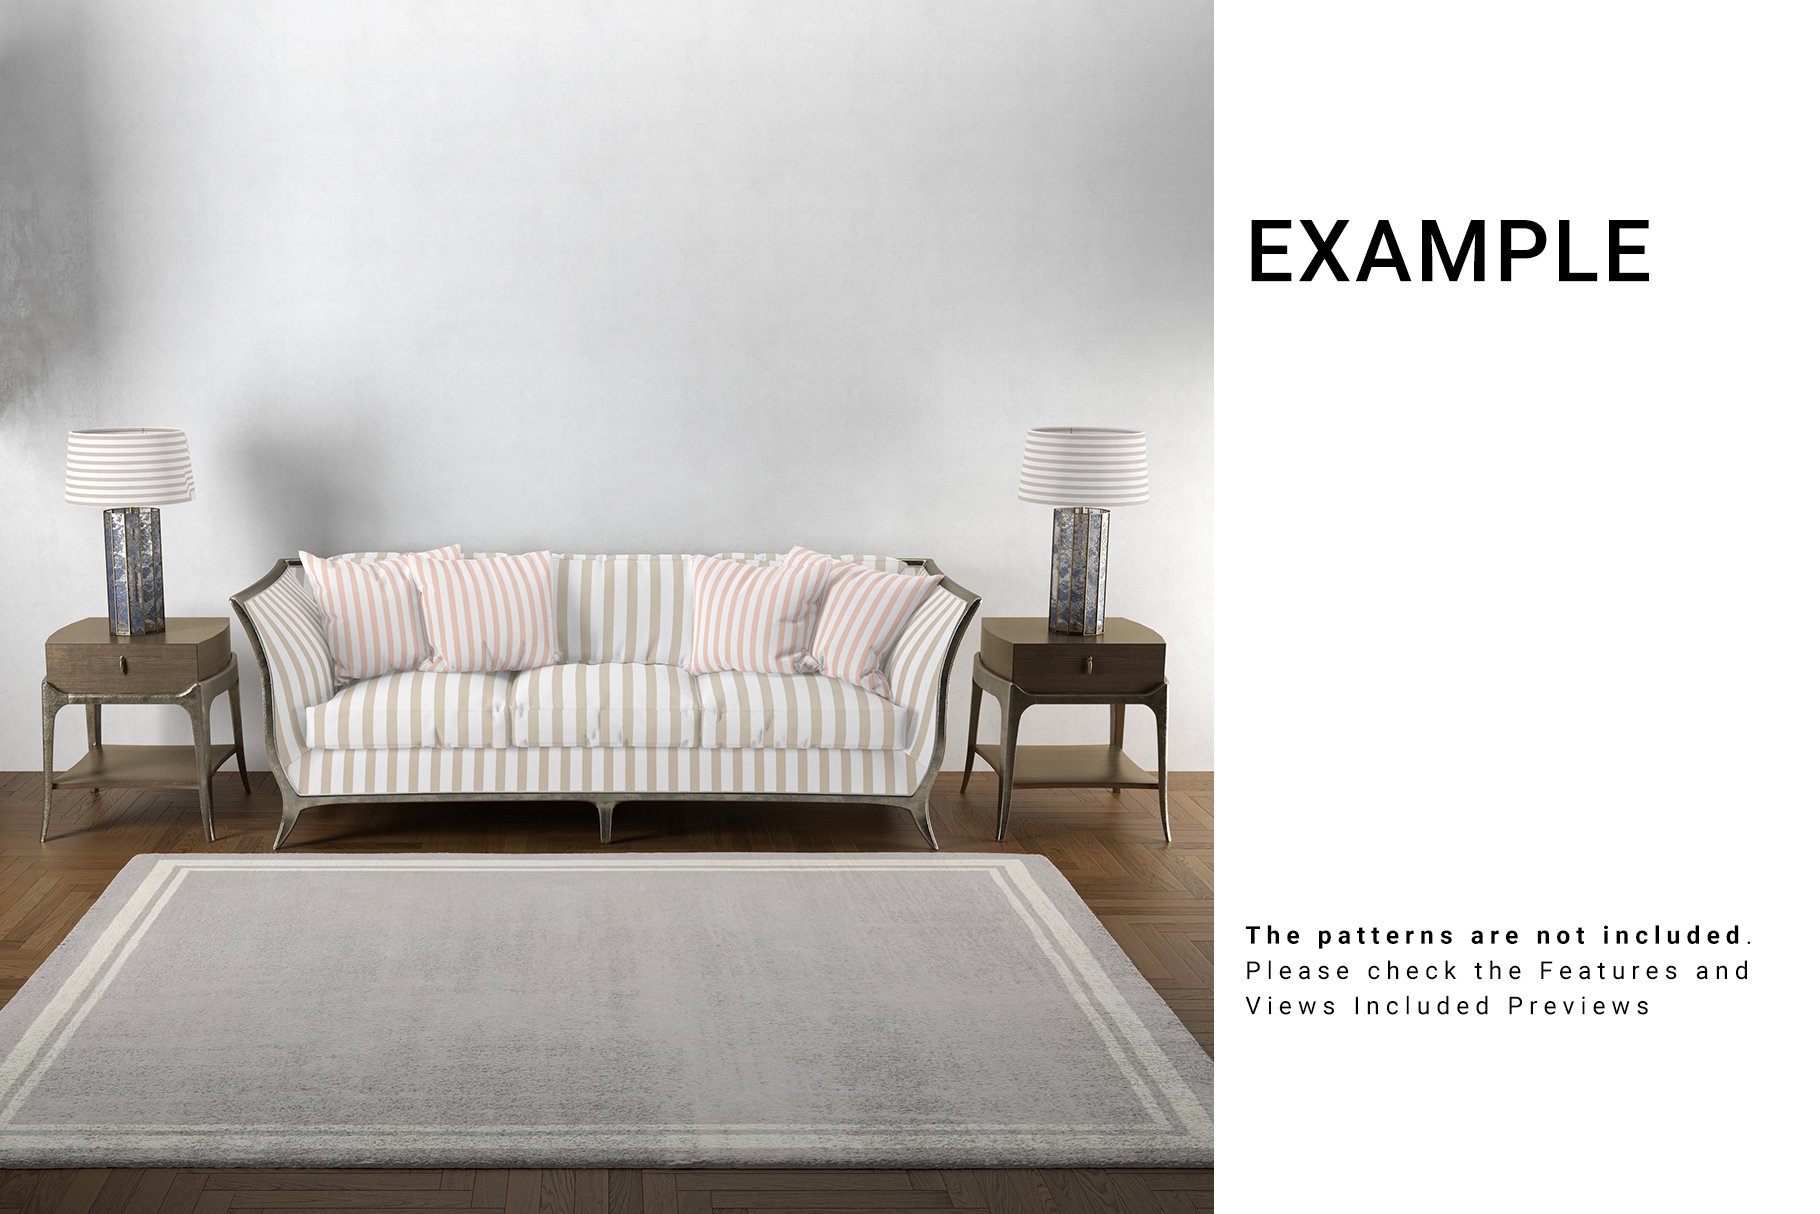 Living Room - Sofa Throw Pillows Wall & Carpet Set